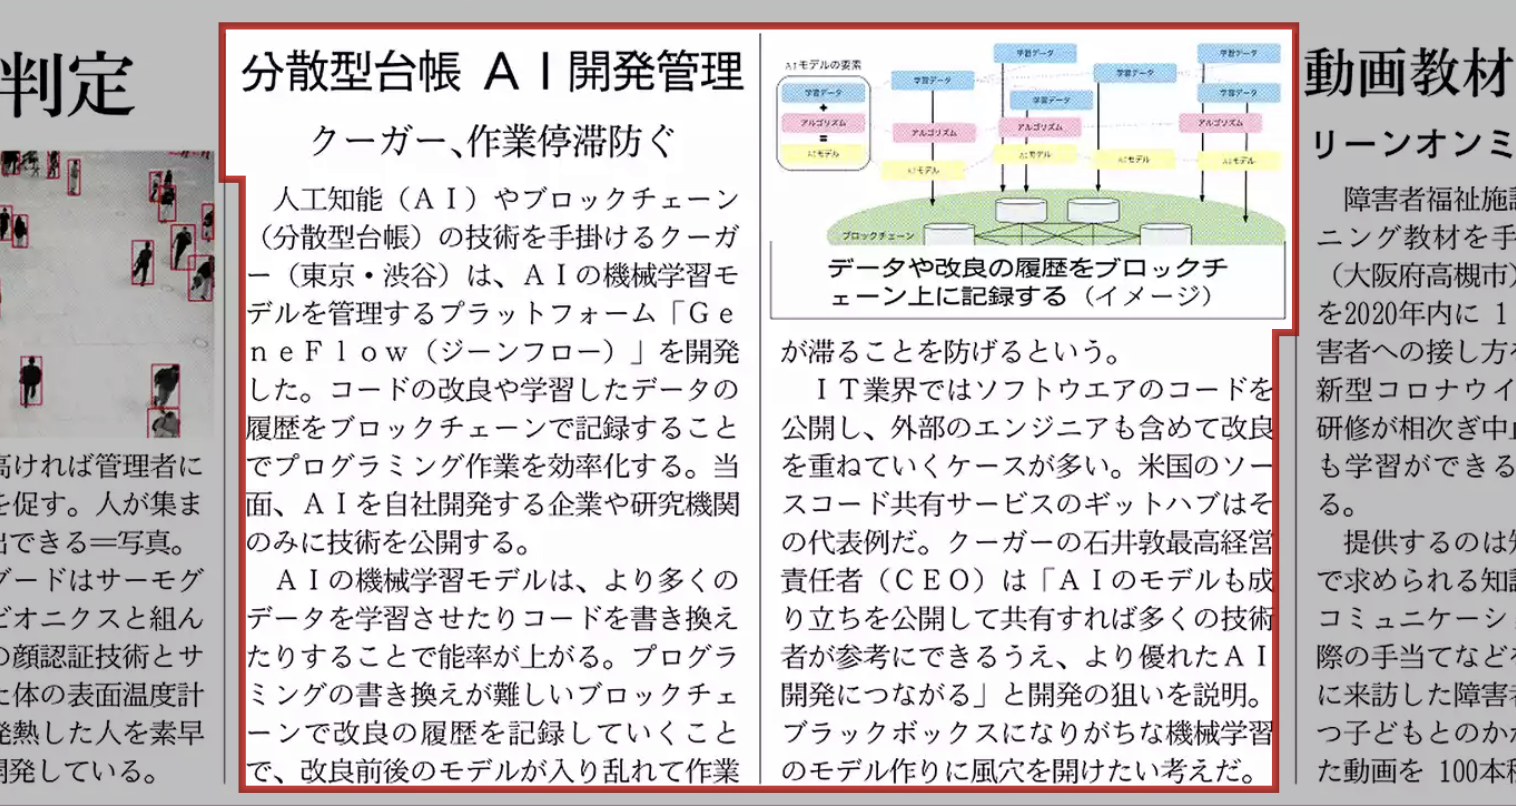 Nikkei Sangyo Shimbun featured the beta version of "GeneFlow," an AI model management platform utilizing blockchain